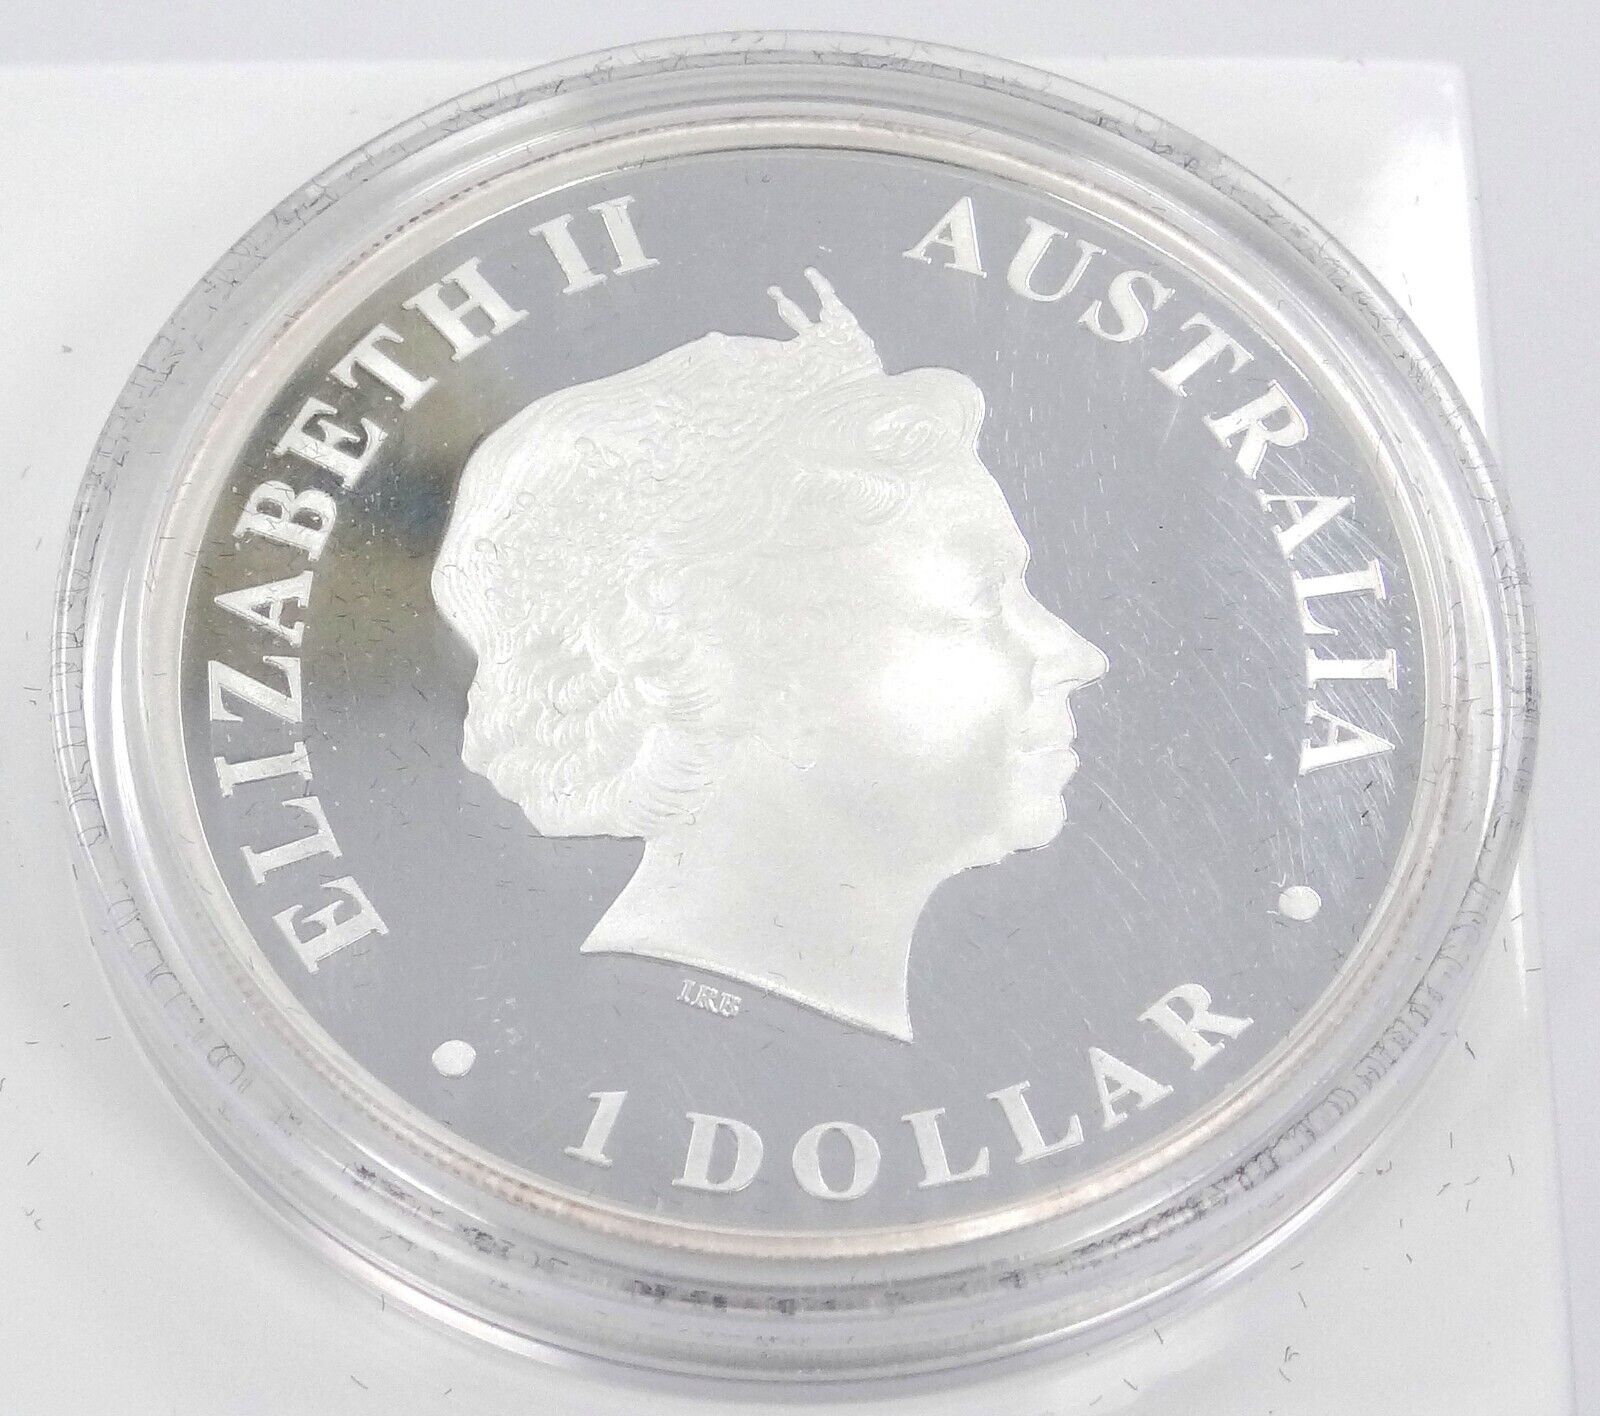 1 Oz Silver Coin 2011 $1 Australia Discover Australia Proof Color Kookaburra-classypw.com-1